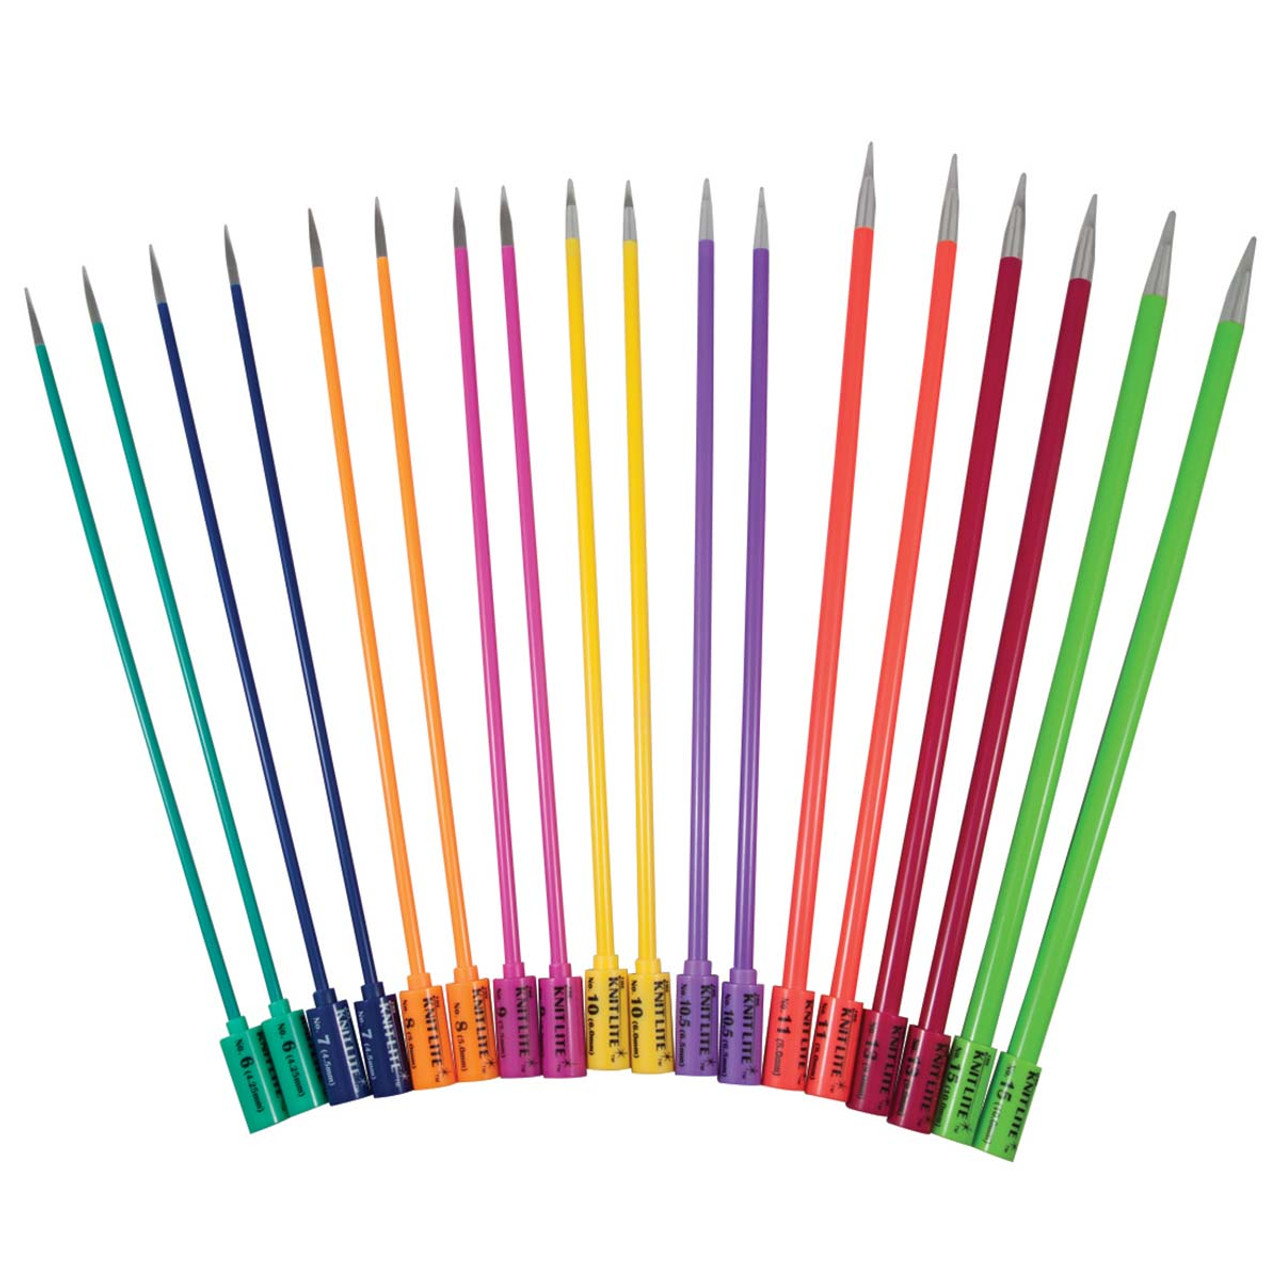 13-14 Single Point Light-Up Knitting Needles